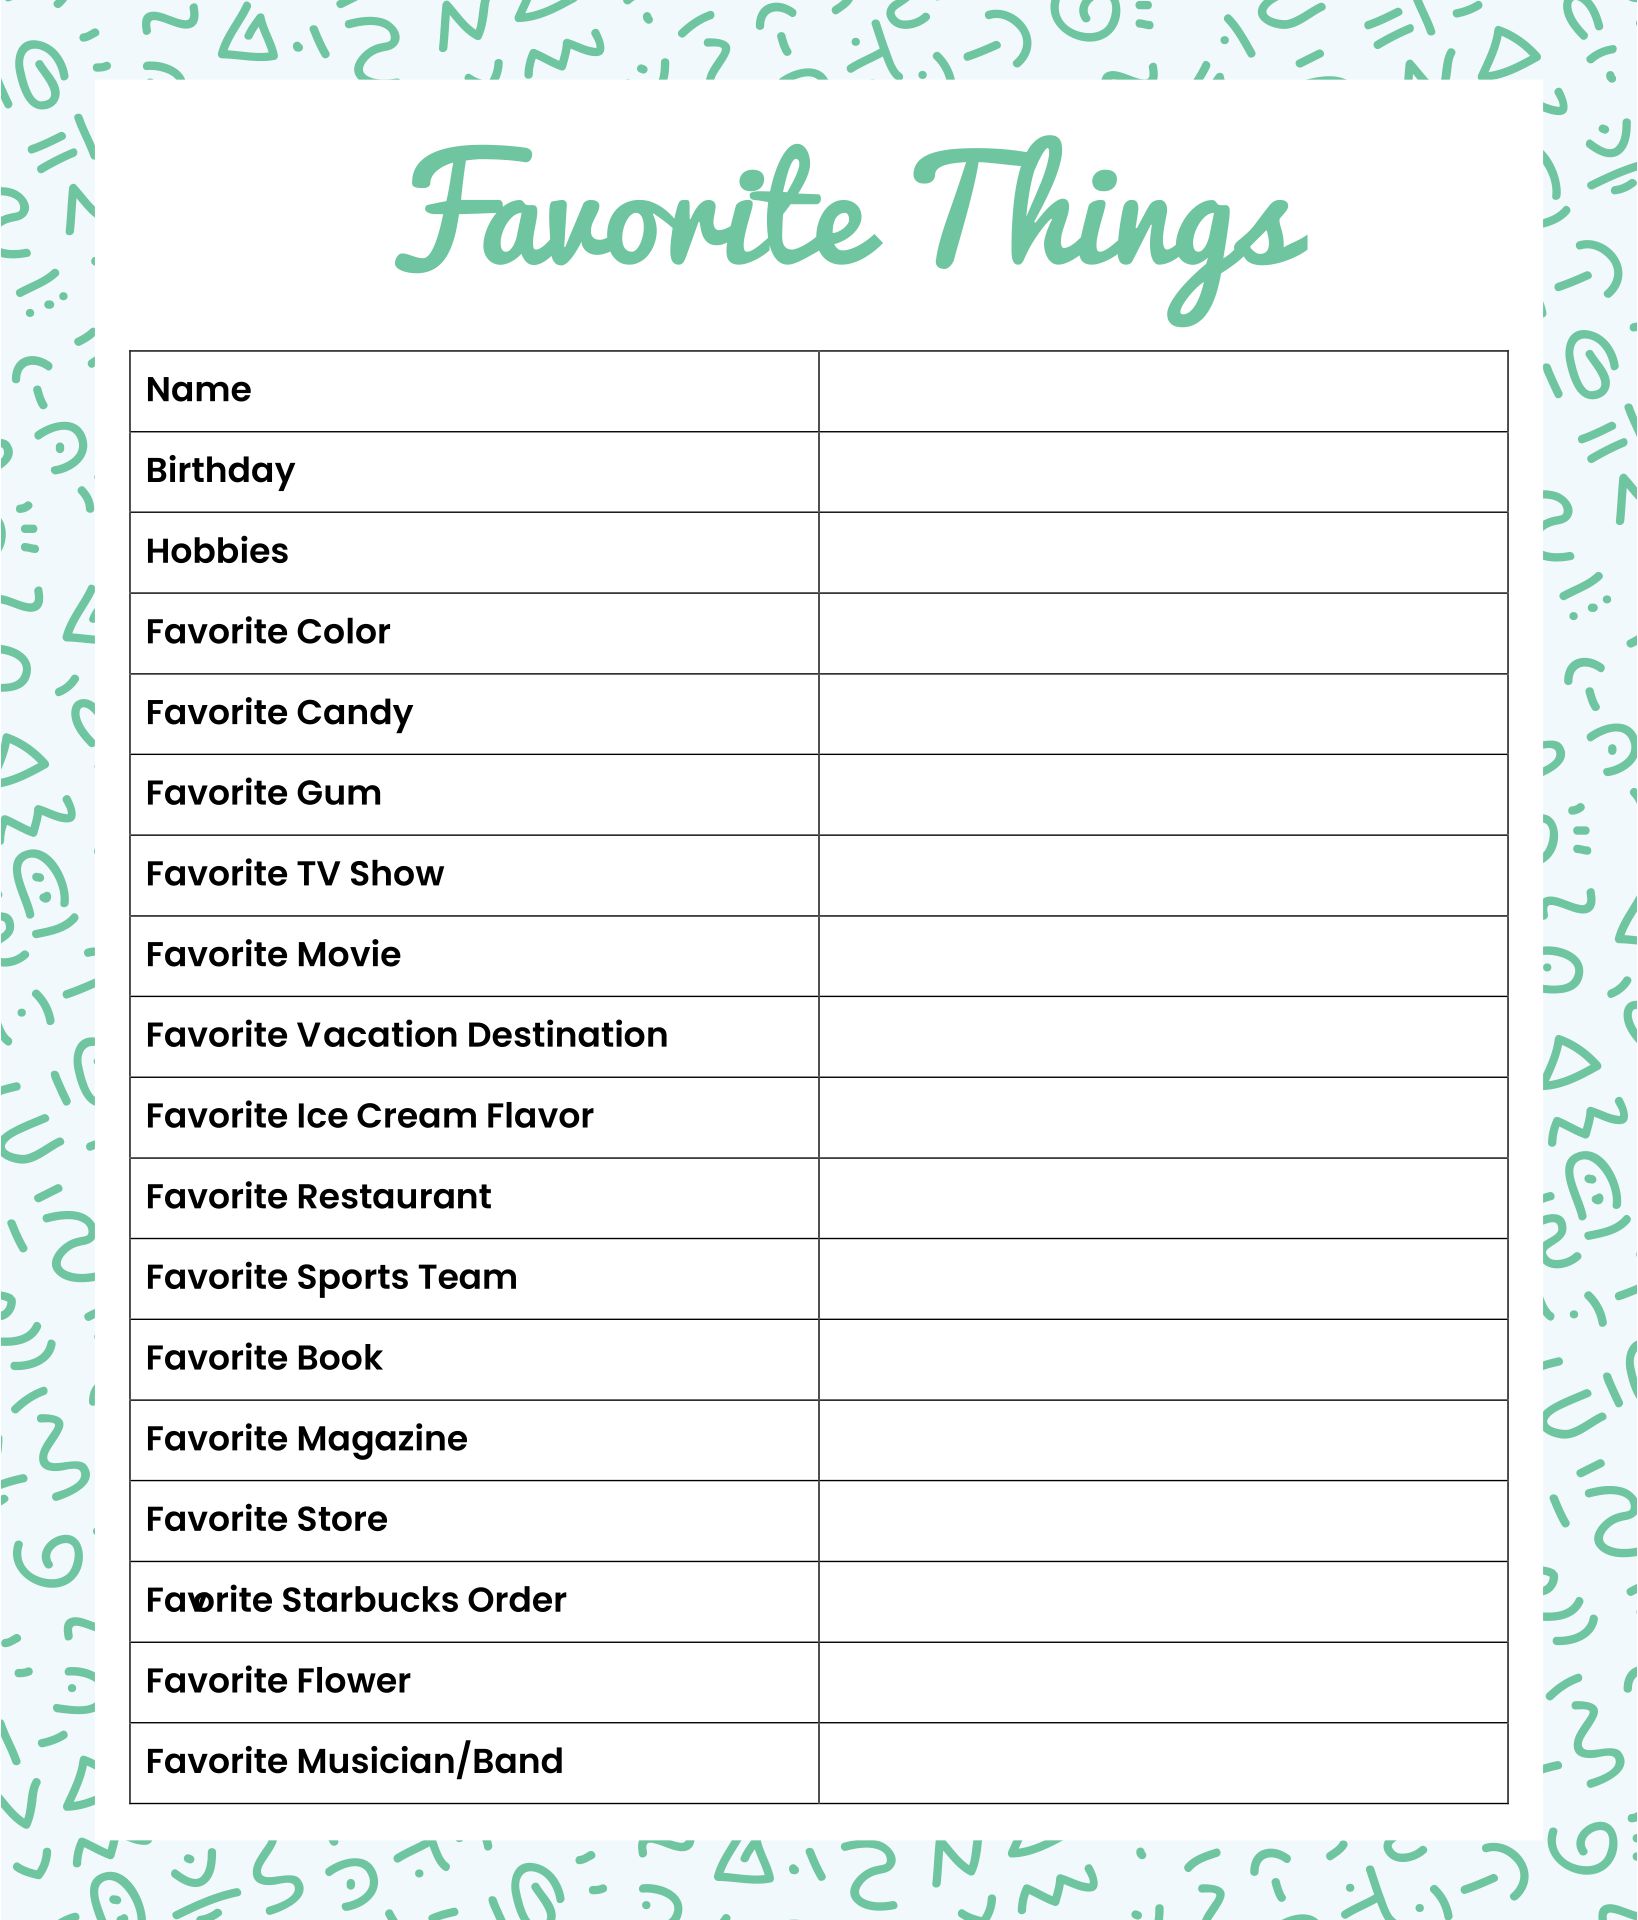 Favorite Things List For Work